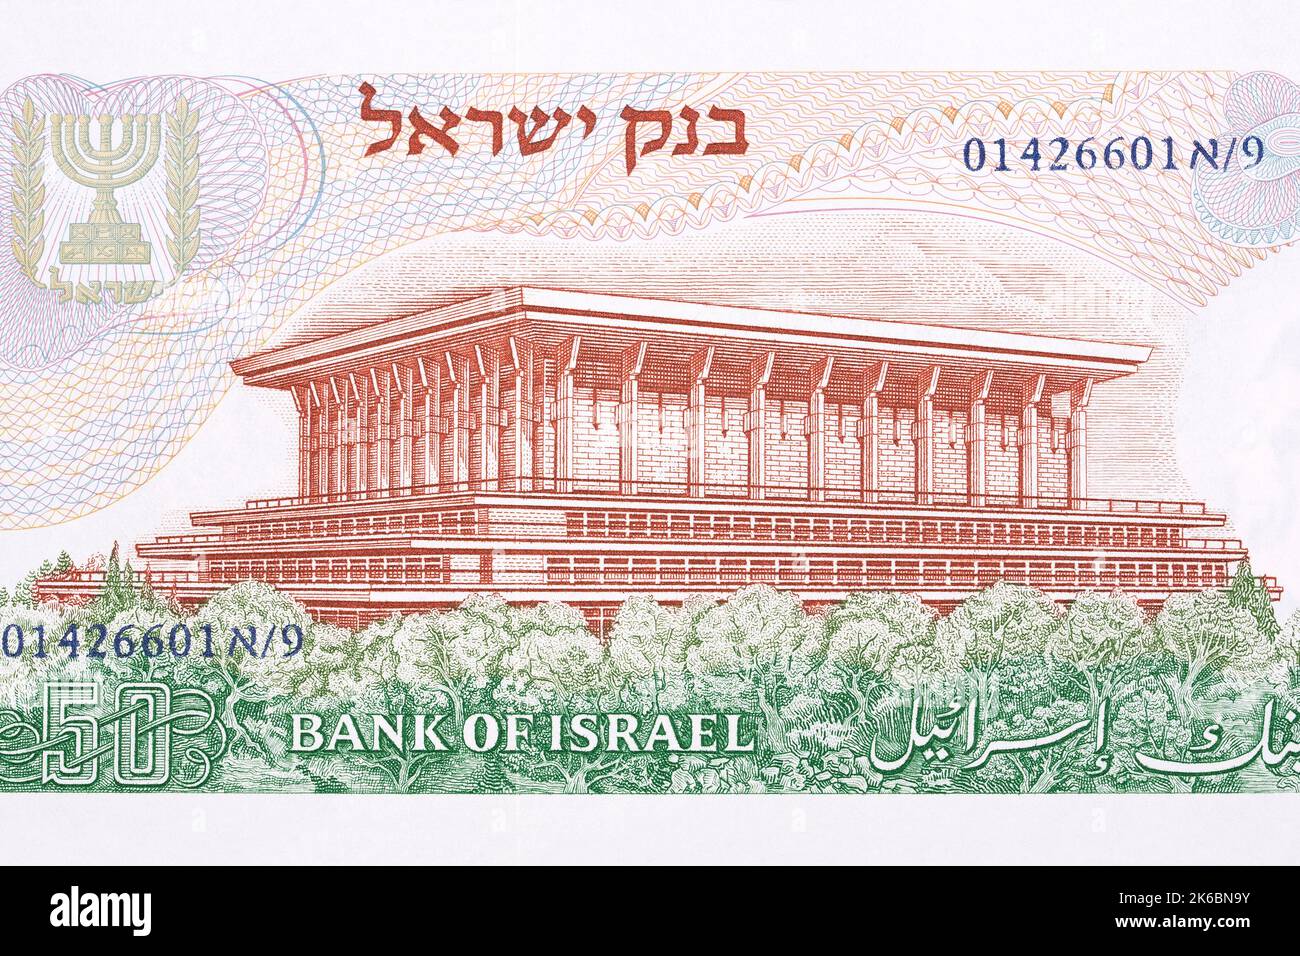 Knesset building in Jerusalem from old Israeli money - Lirot Stock Photo